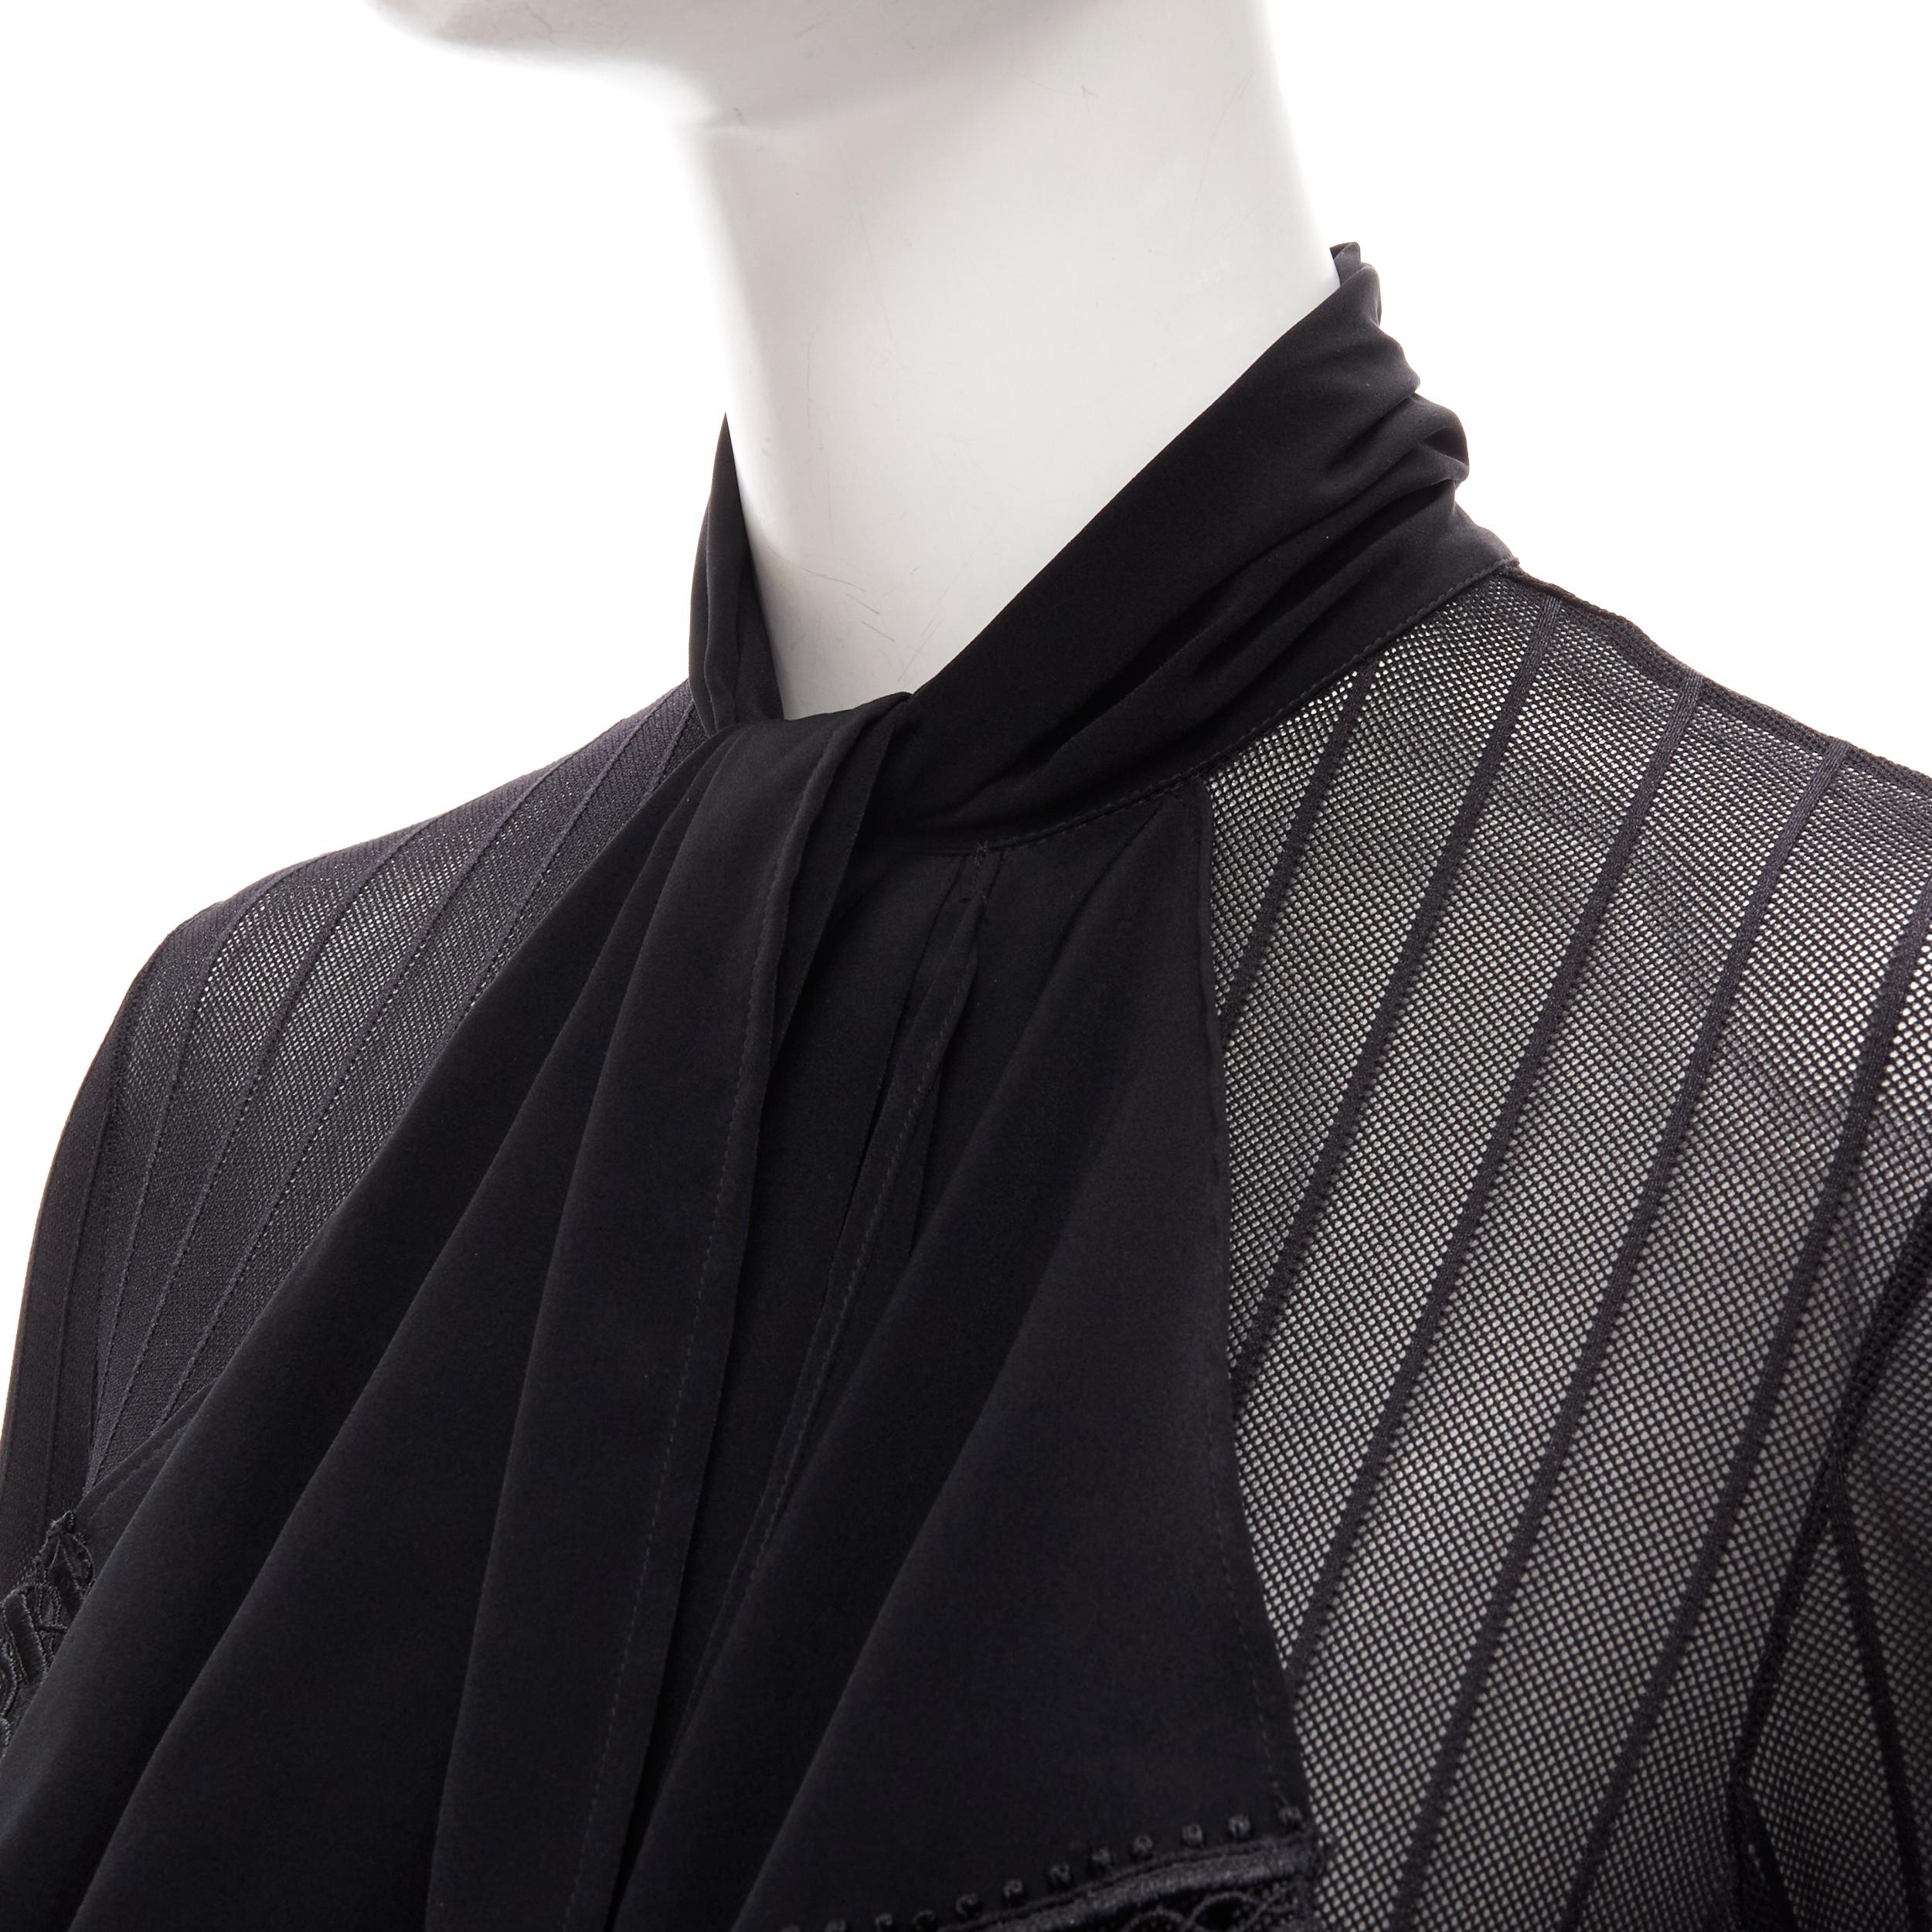 RITMO DI PERLA LA PERLA Vintage black embroidery tie scarf sheer bodysuit IT42 M 3